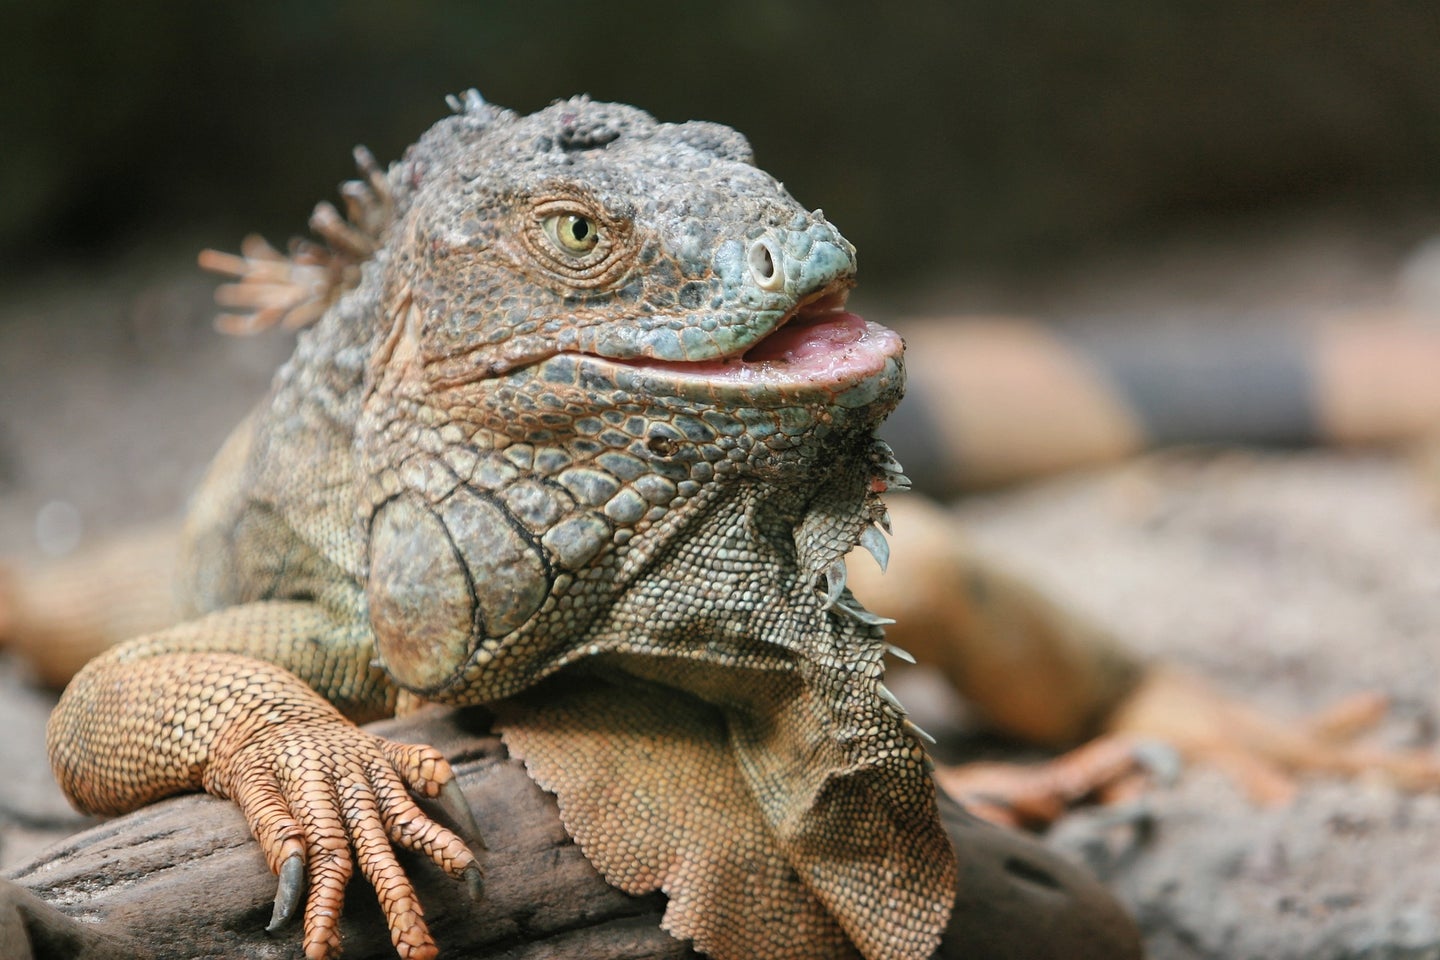 A large iguana on rocks.